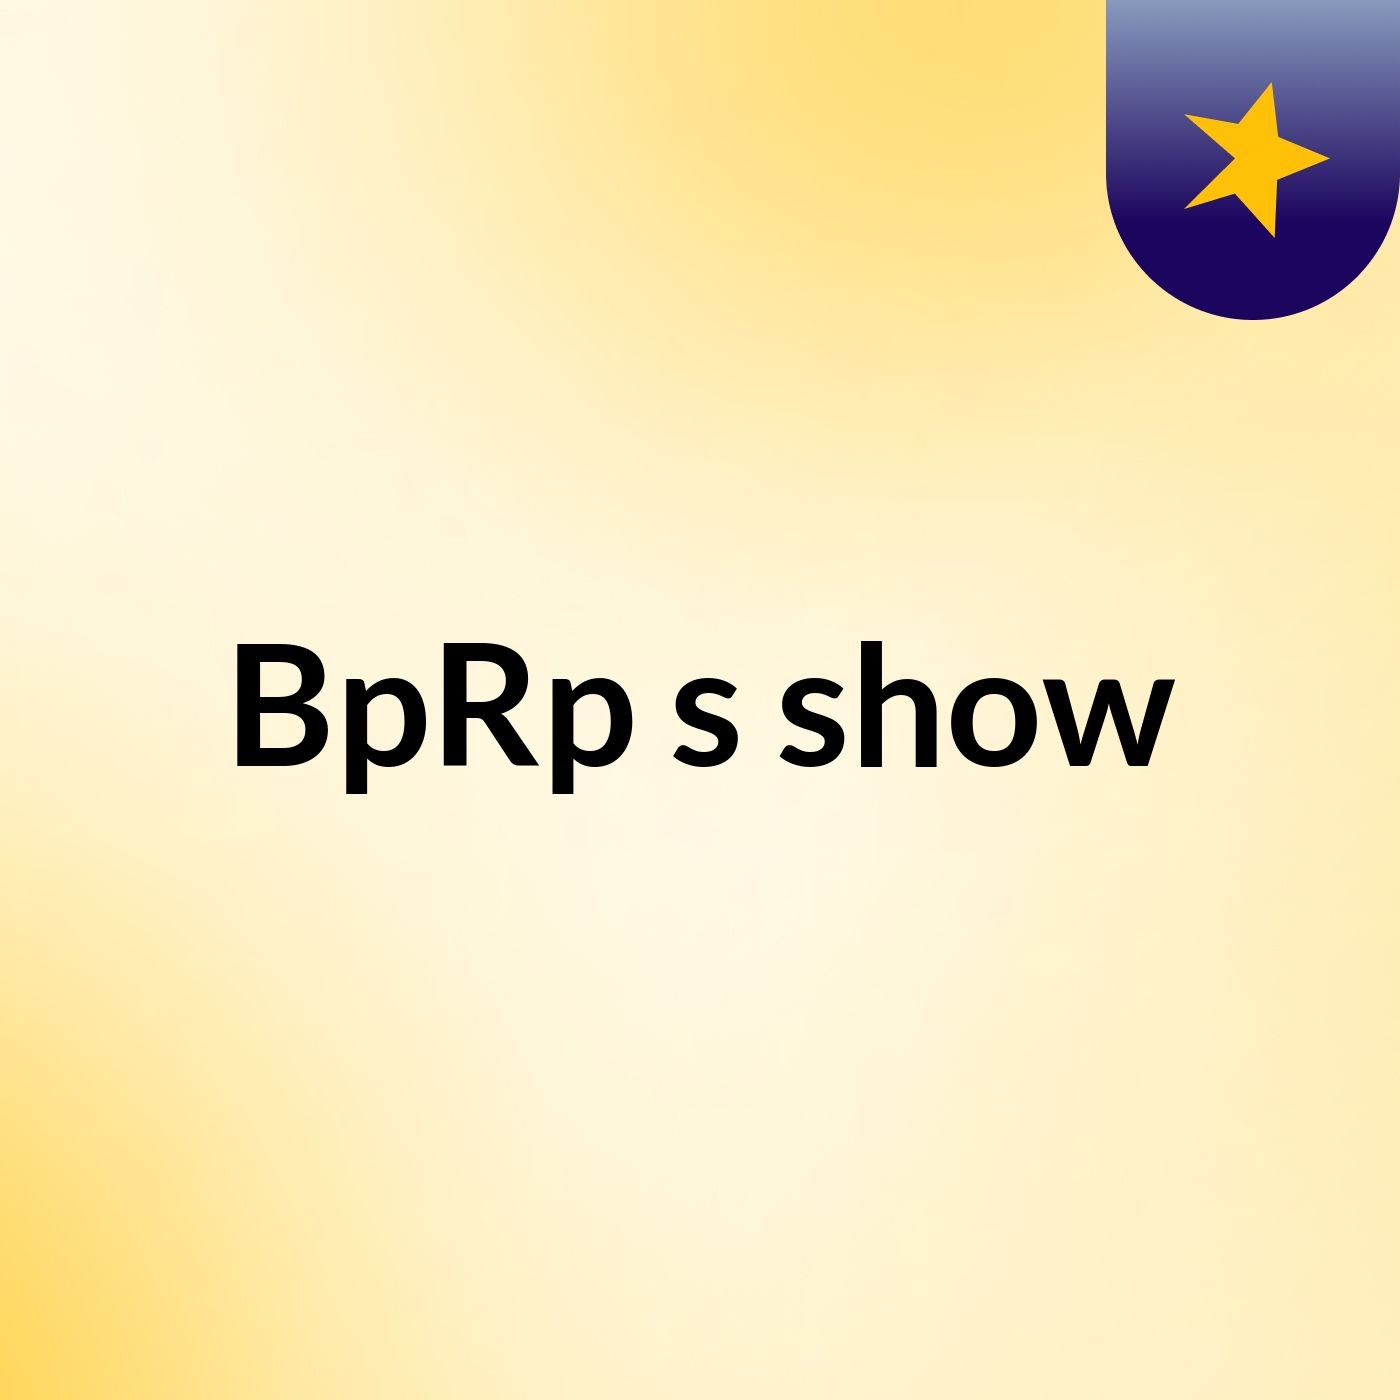 BpRp's show